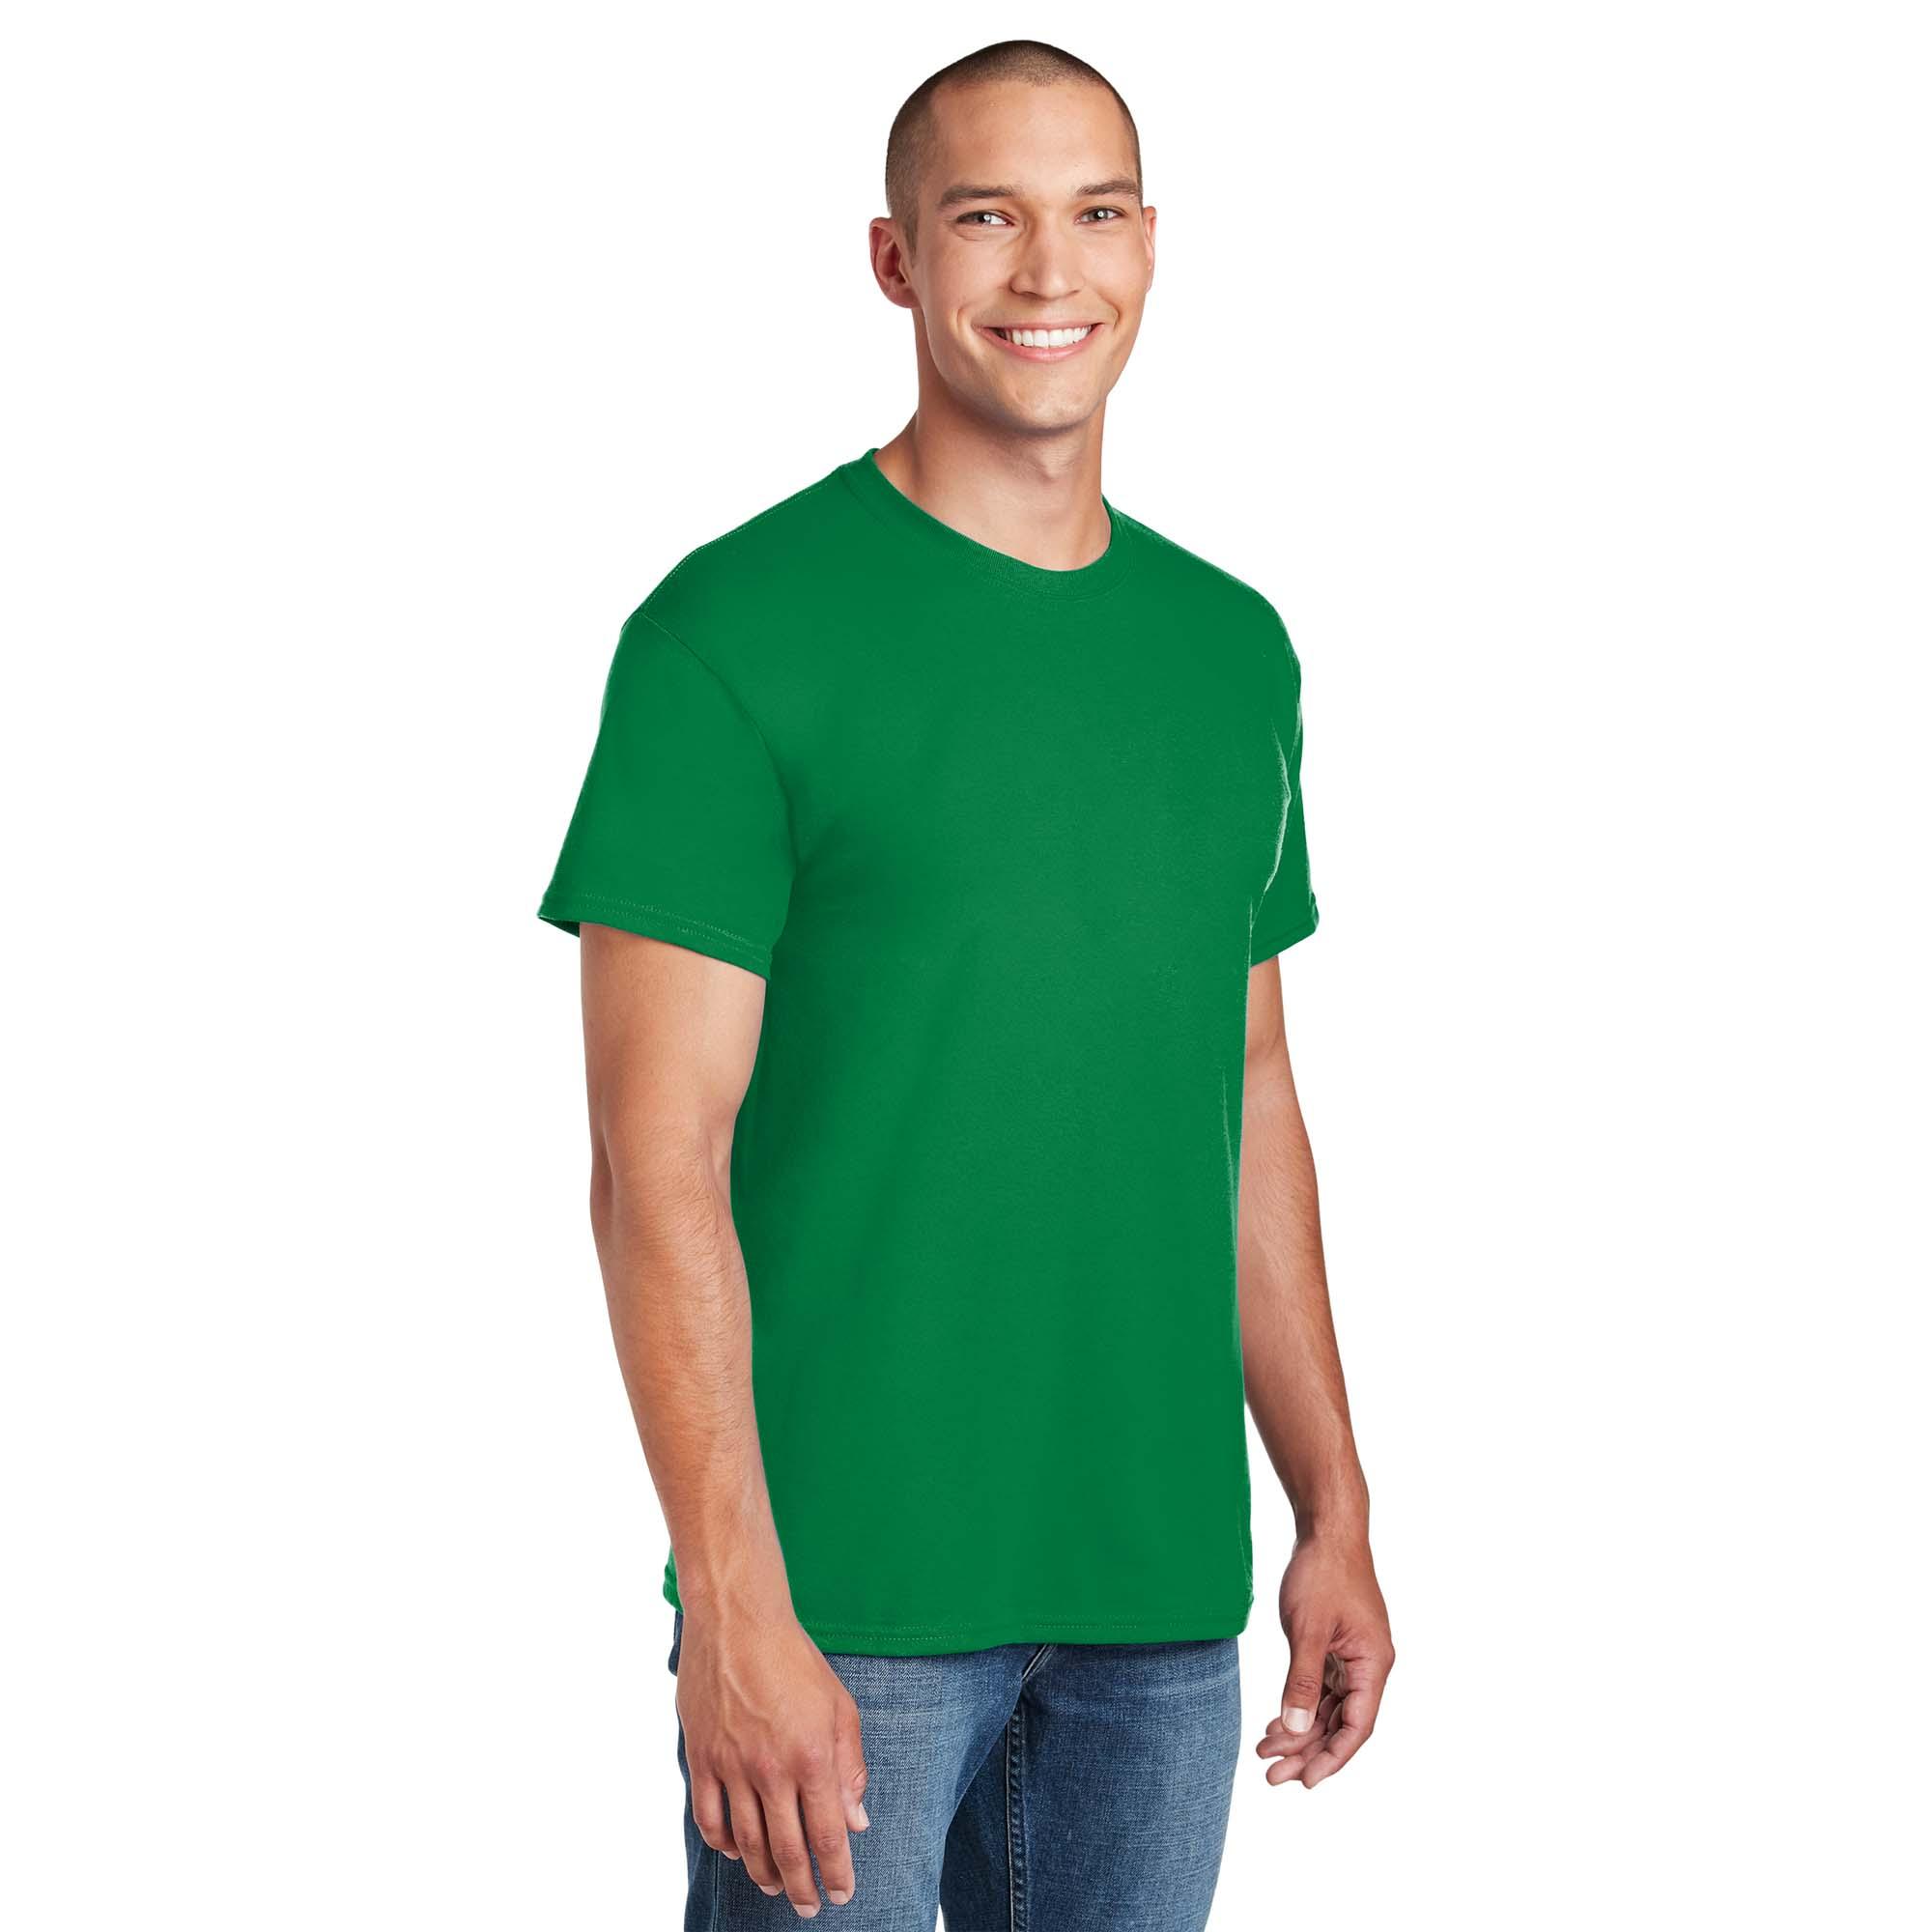 Lot of 5 Gildan Youth Size Medium Kelly Green Short Sleeve Crew Neck T-Shirt  New